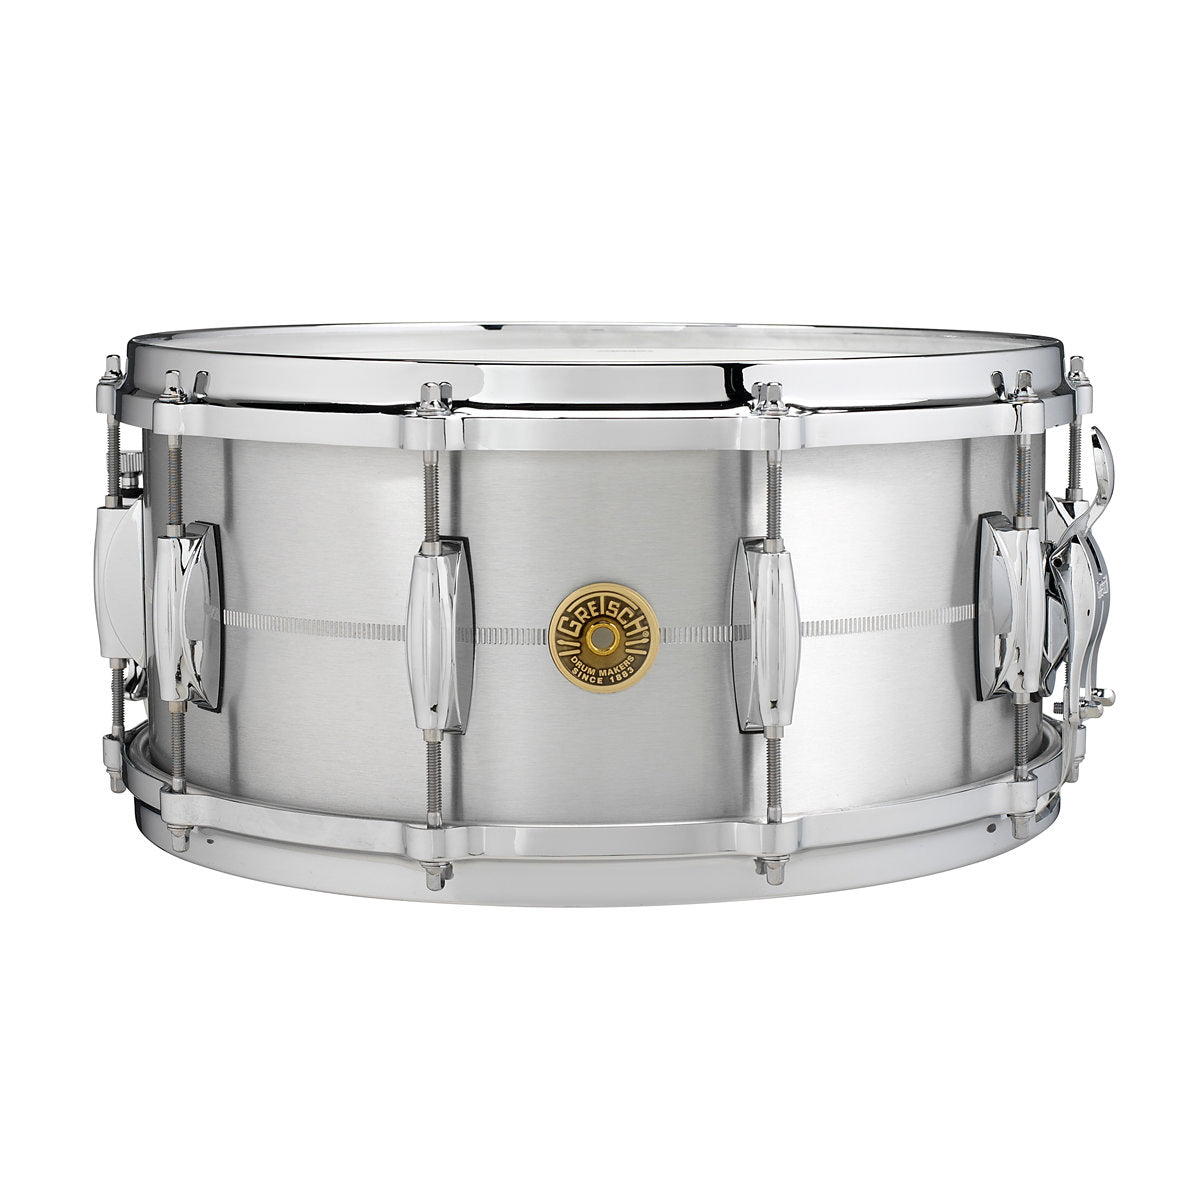 Gretsch USA Solid Aluminium 14" x 6.5" Snare Drum